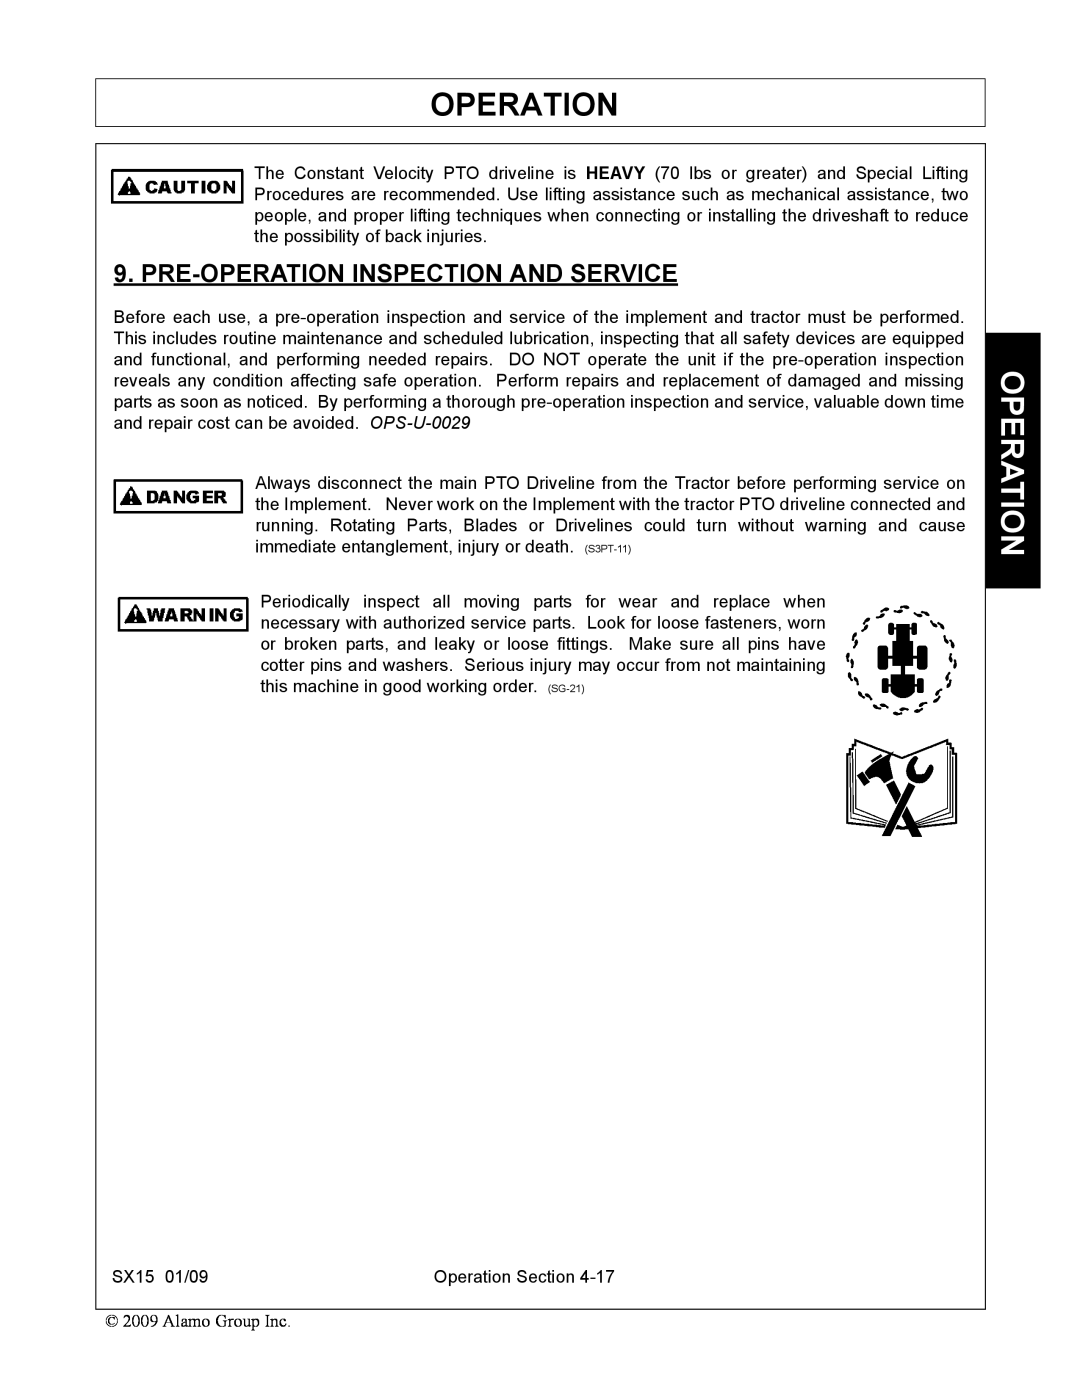 Alamo SX15 manual Pre-Operation Inspection And Service 